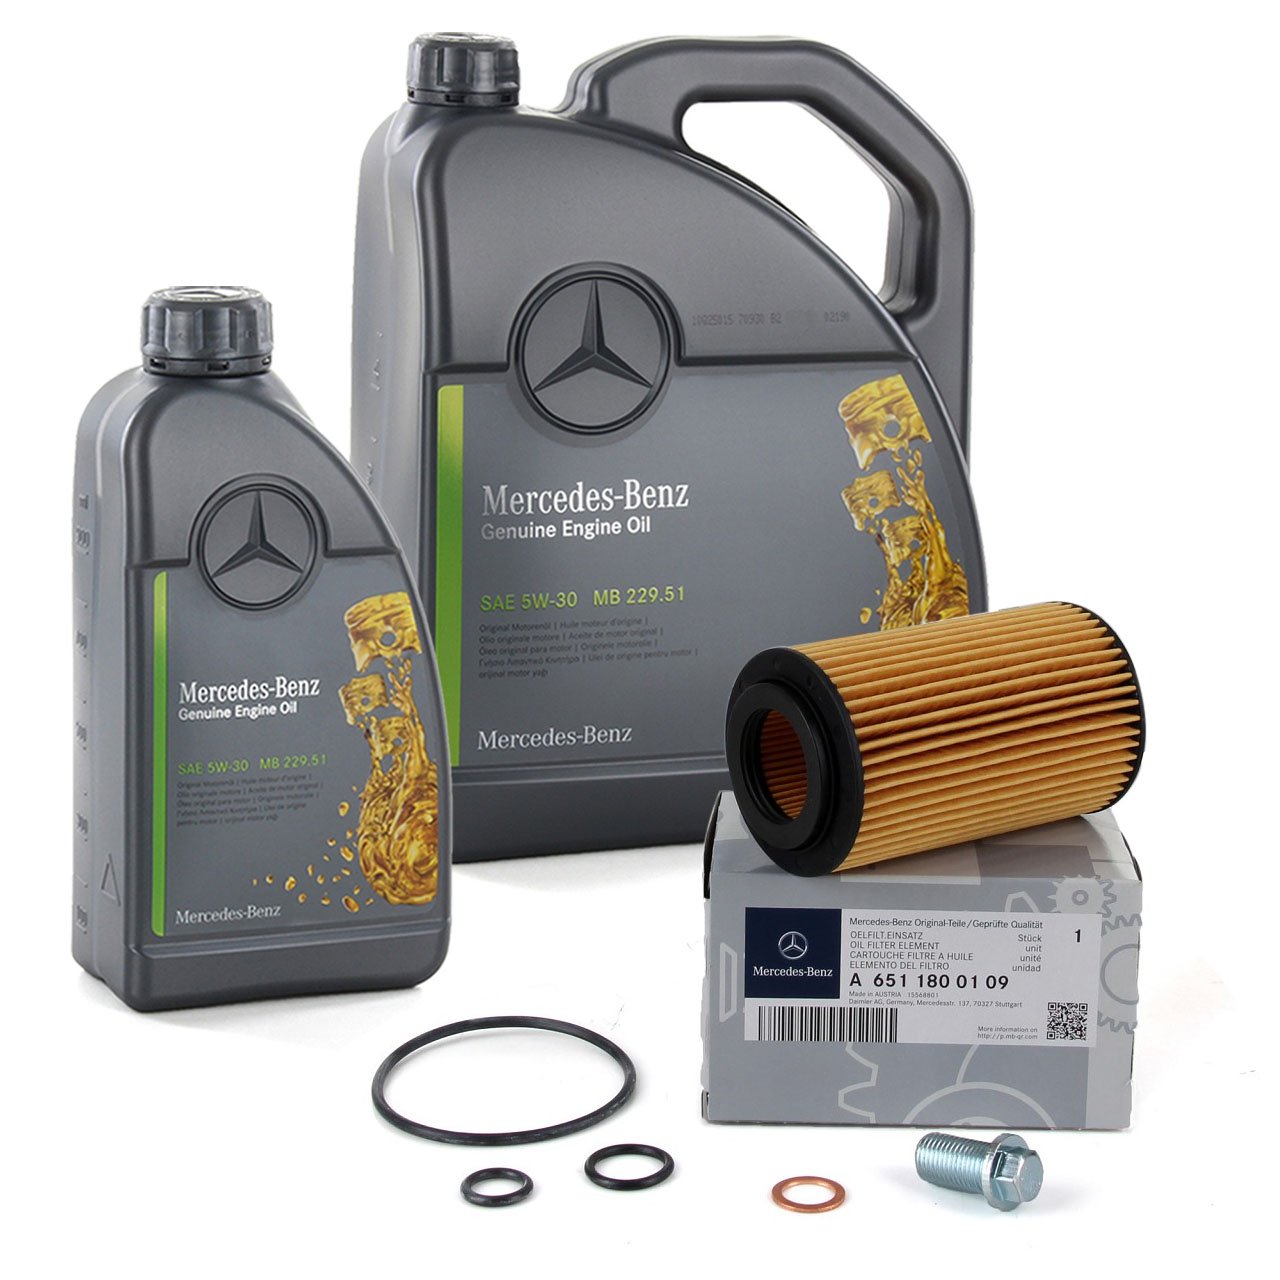 ORIGINAL Mercedes-Benz ÖL Motoröl 5W30 MB 229.51 6 Liter + Ölfilter 6511800109